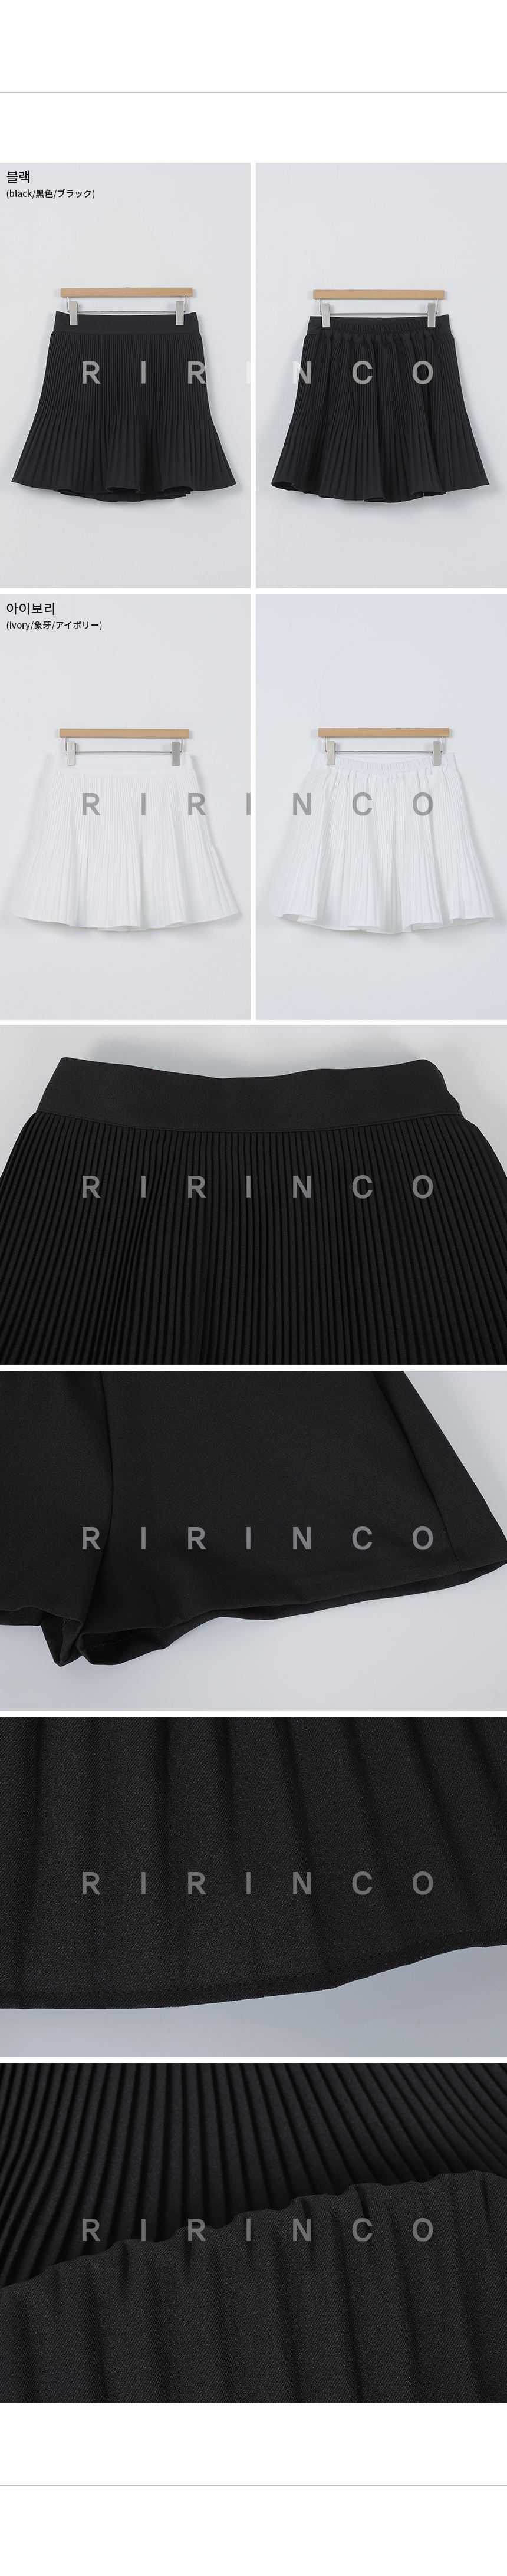 RIRINCO プリーツバックゴムフレアミニスカート(インナーパンツ付き)